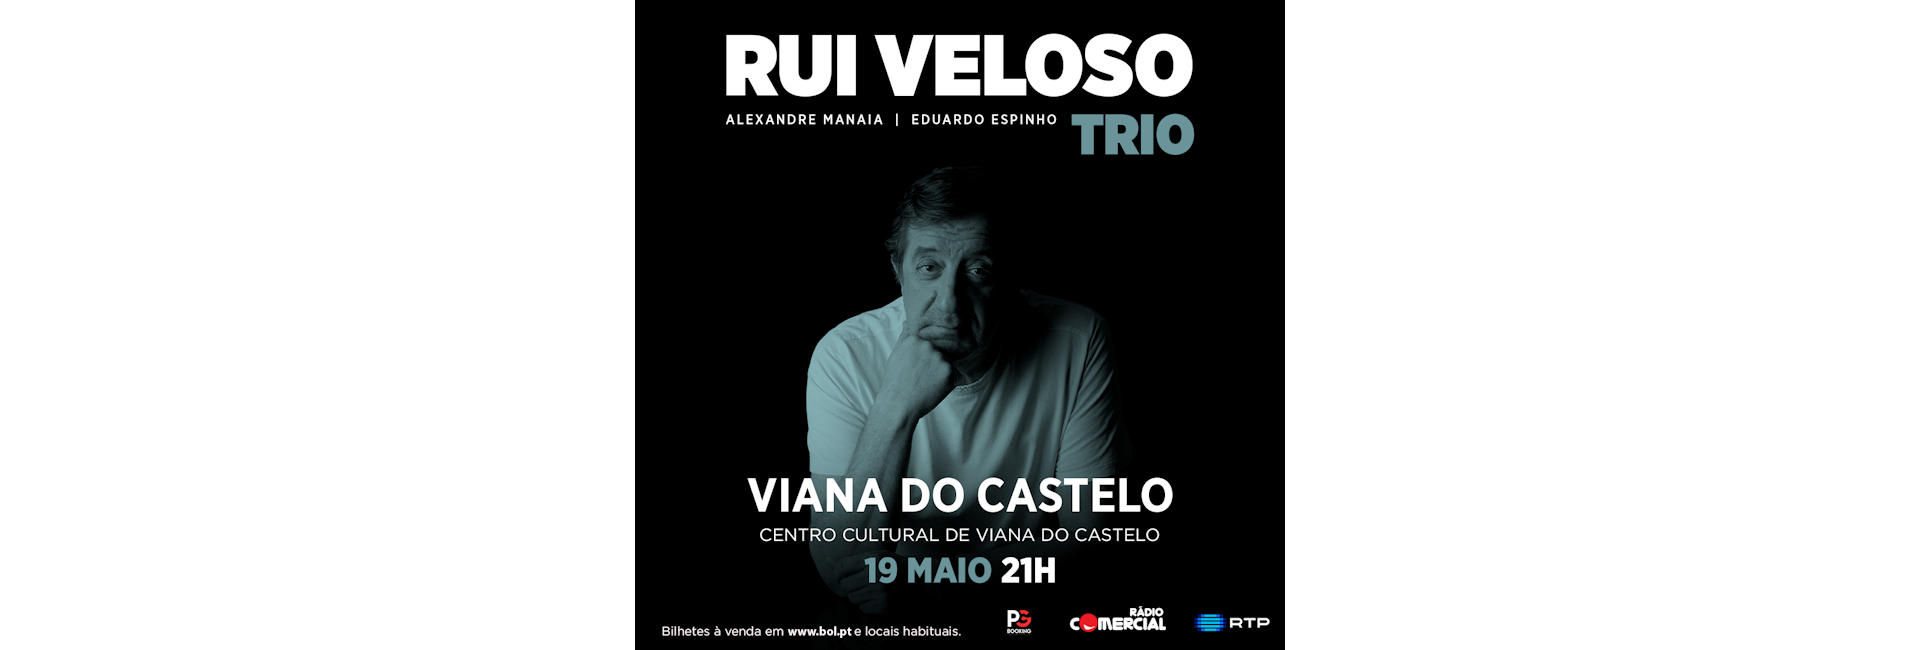 Rui Veloso Trio no Centro Cultural de Viana do Castelo – 19 maio